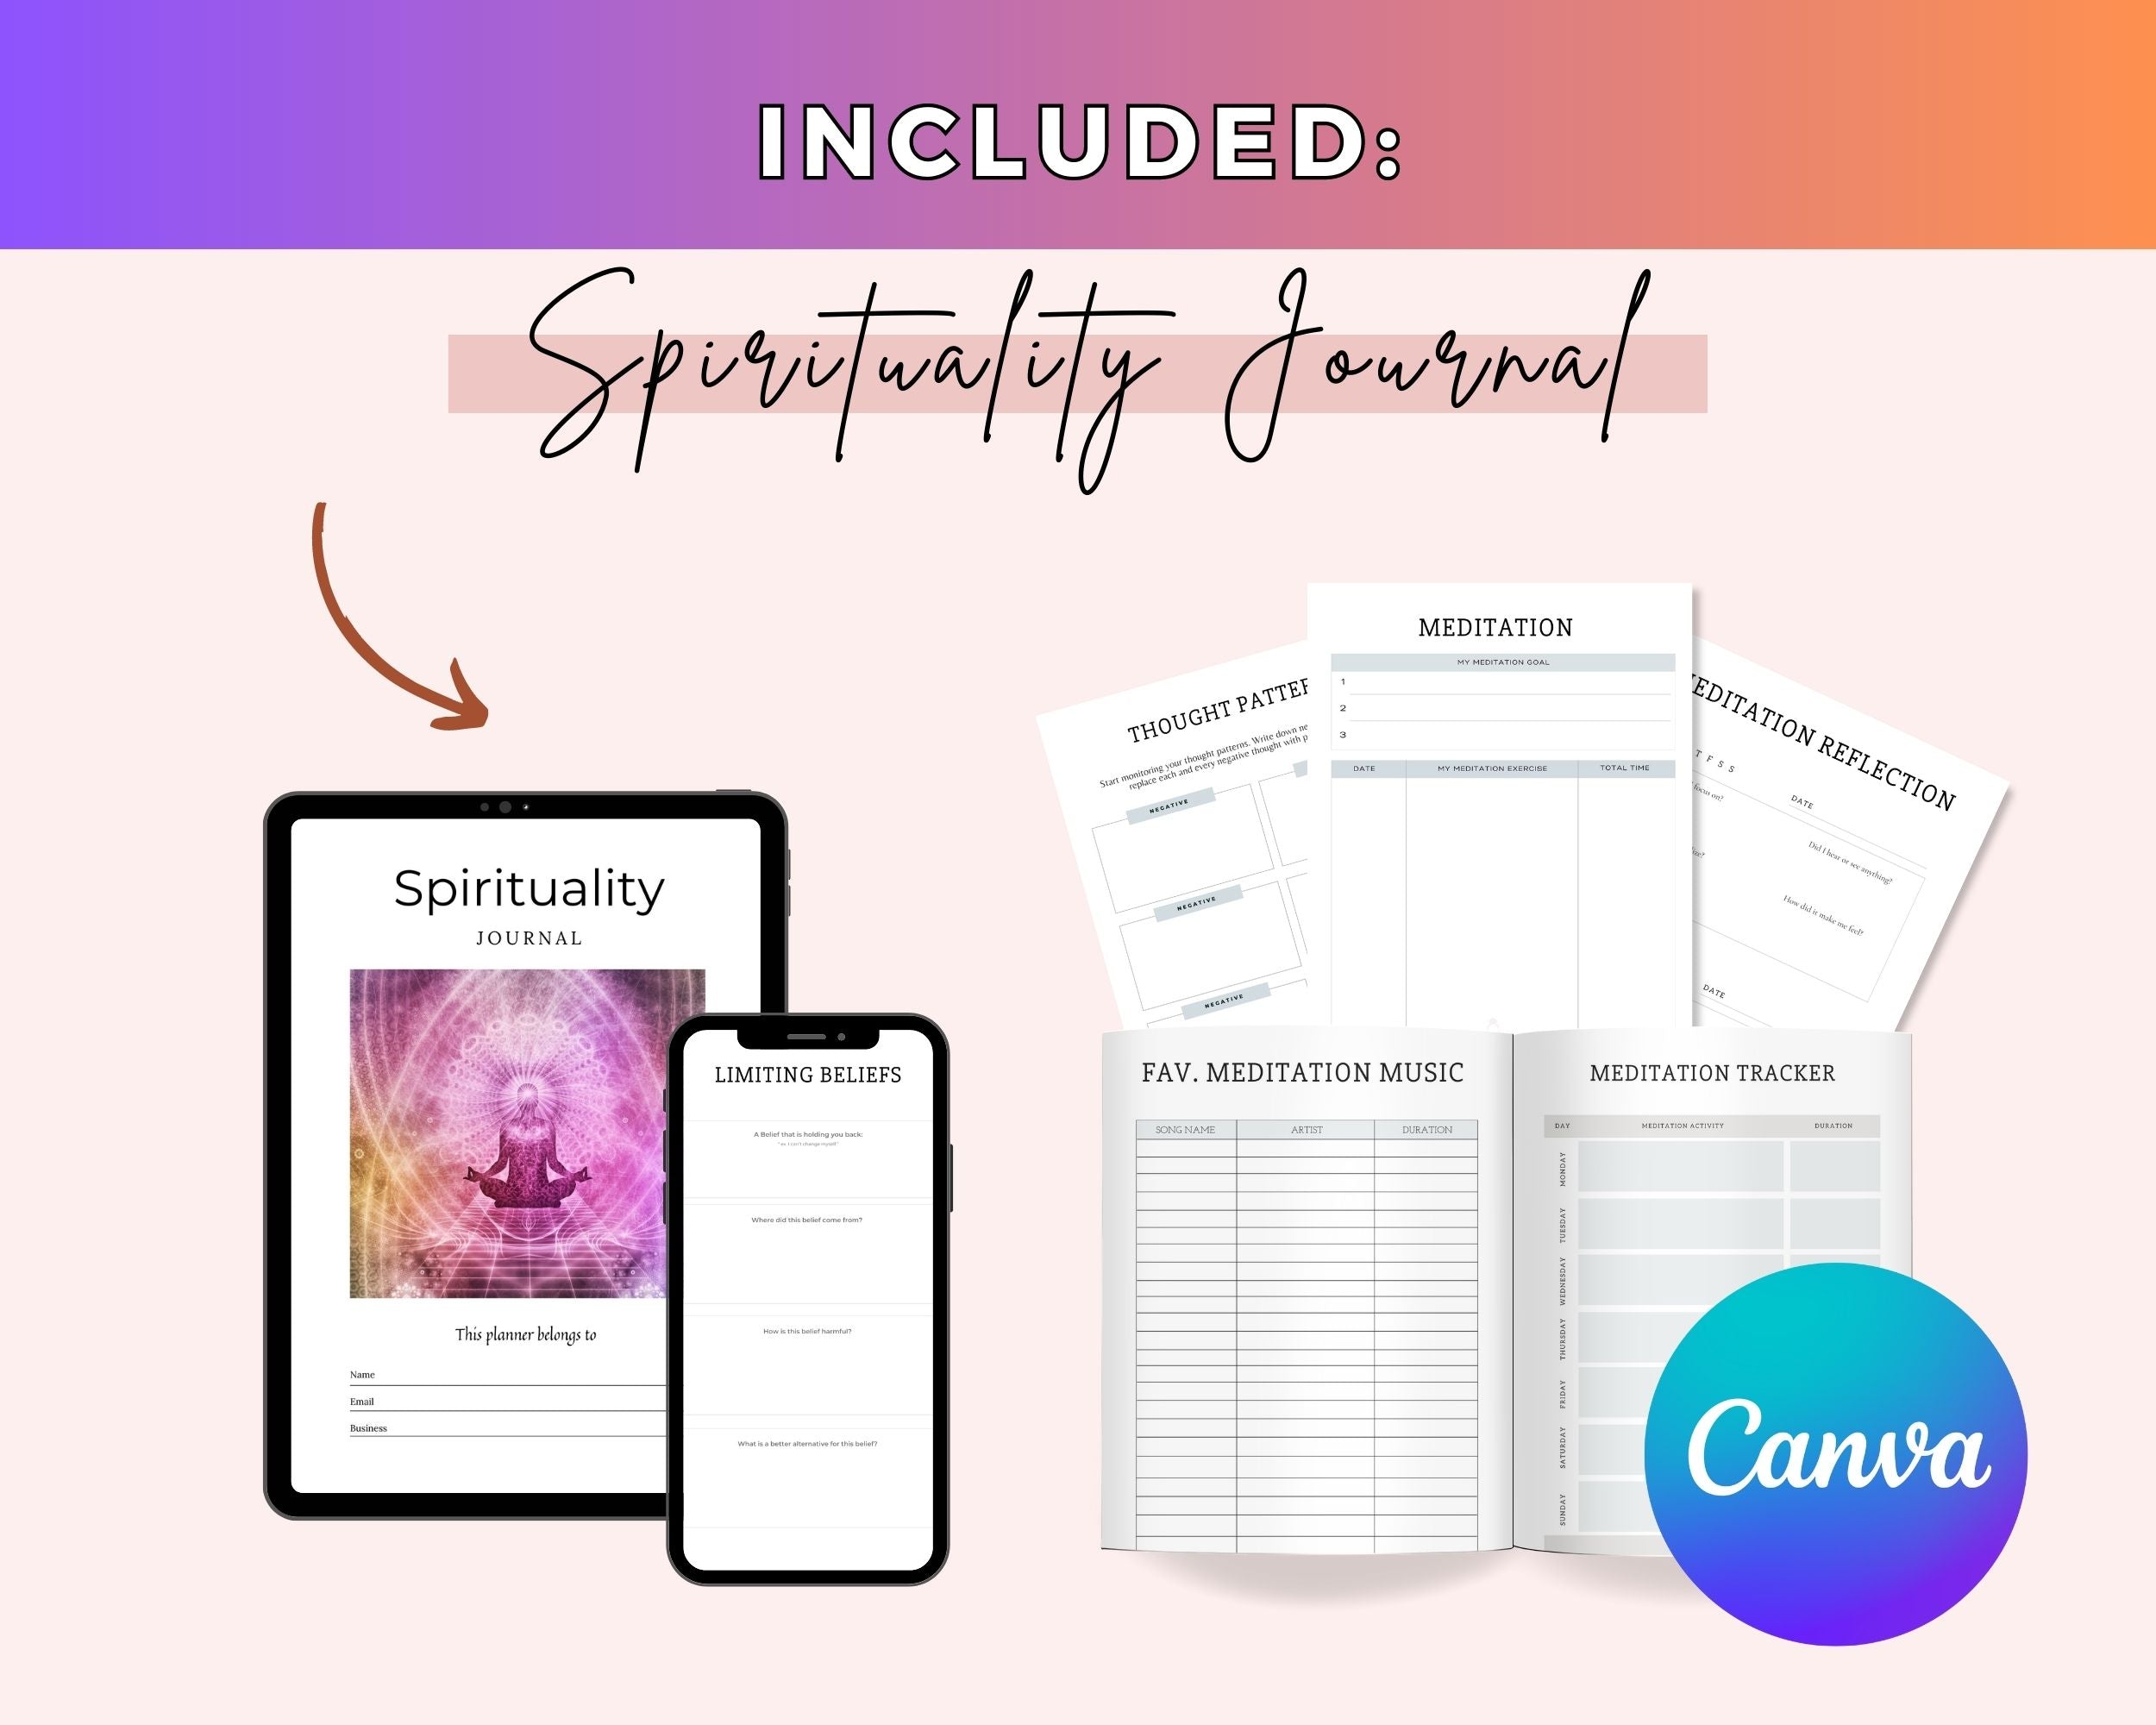 Spirituality Mini Bundle Kit | For Commercial Use